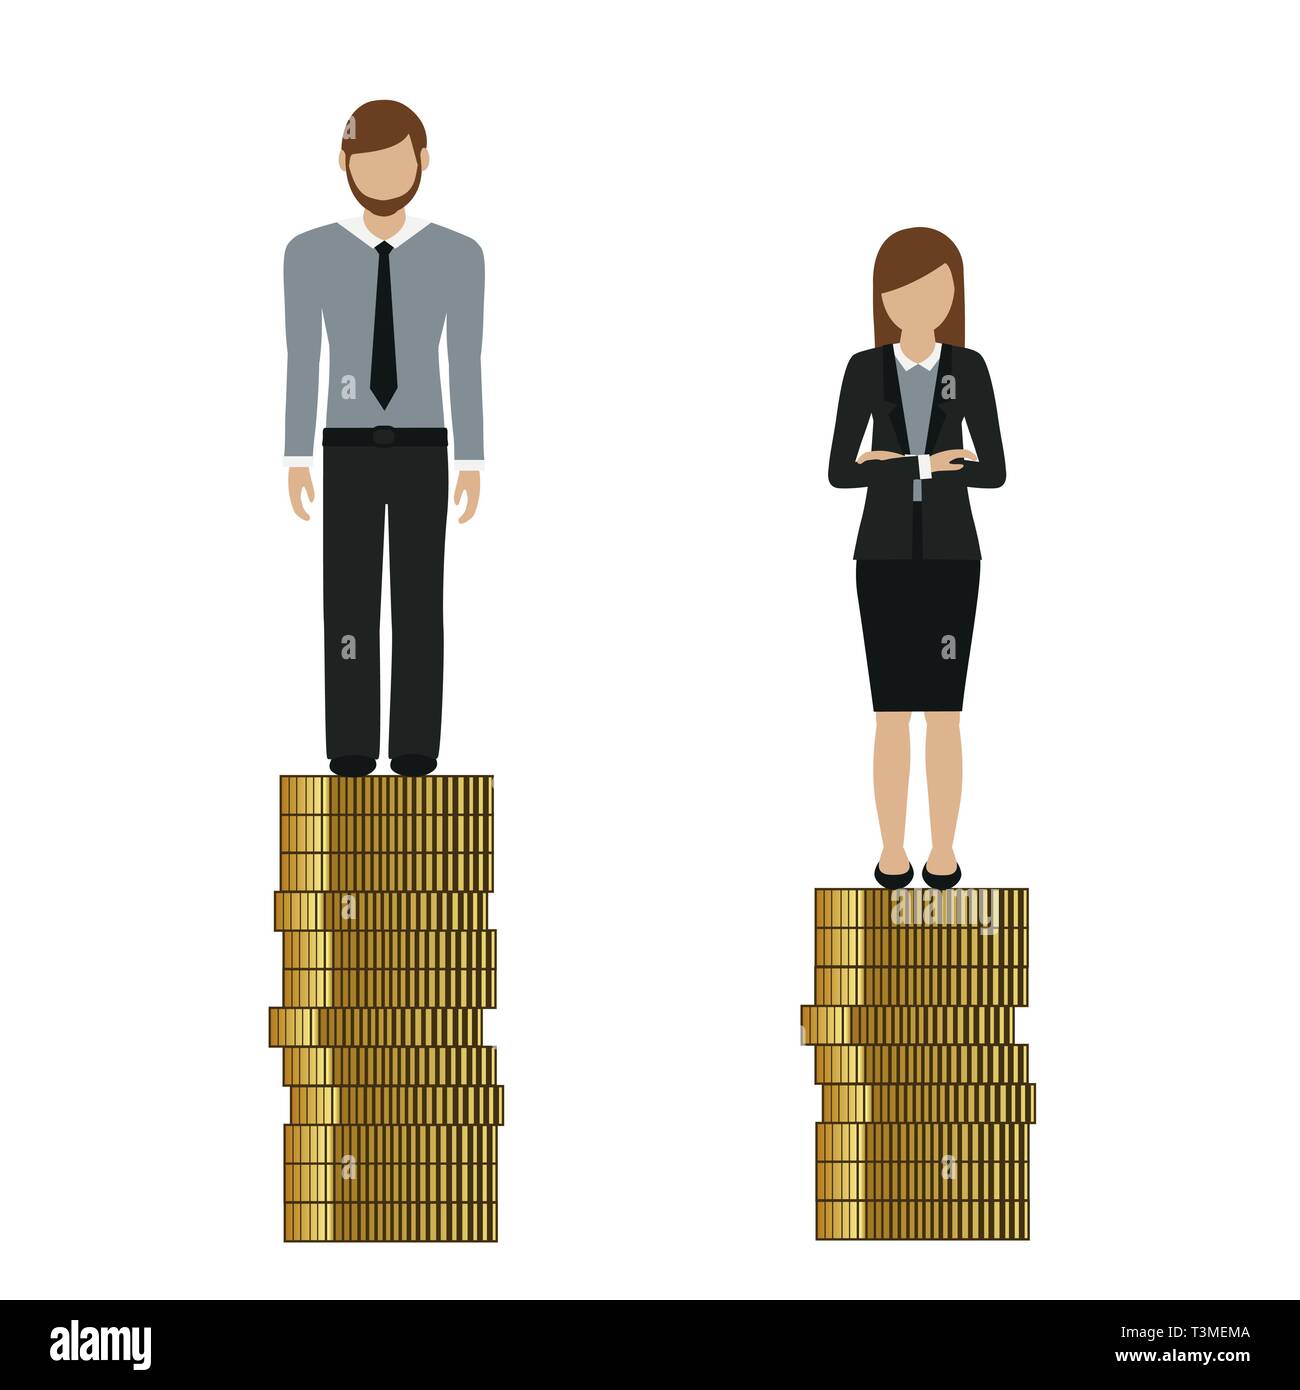 Frau verdient weniger Geld als Mann diskriminiert Vektor-illustration EPS 10. Stock Vektor